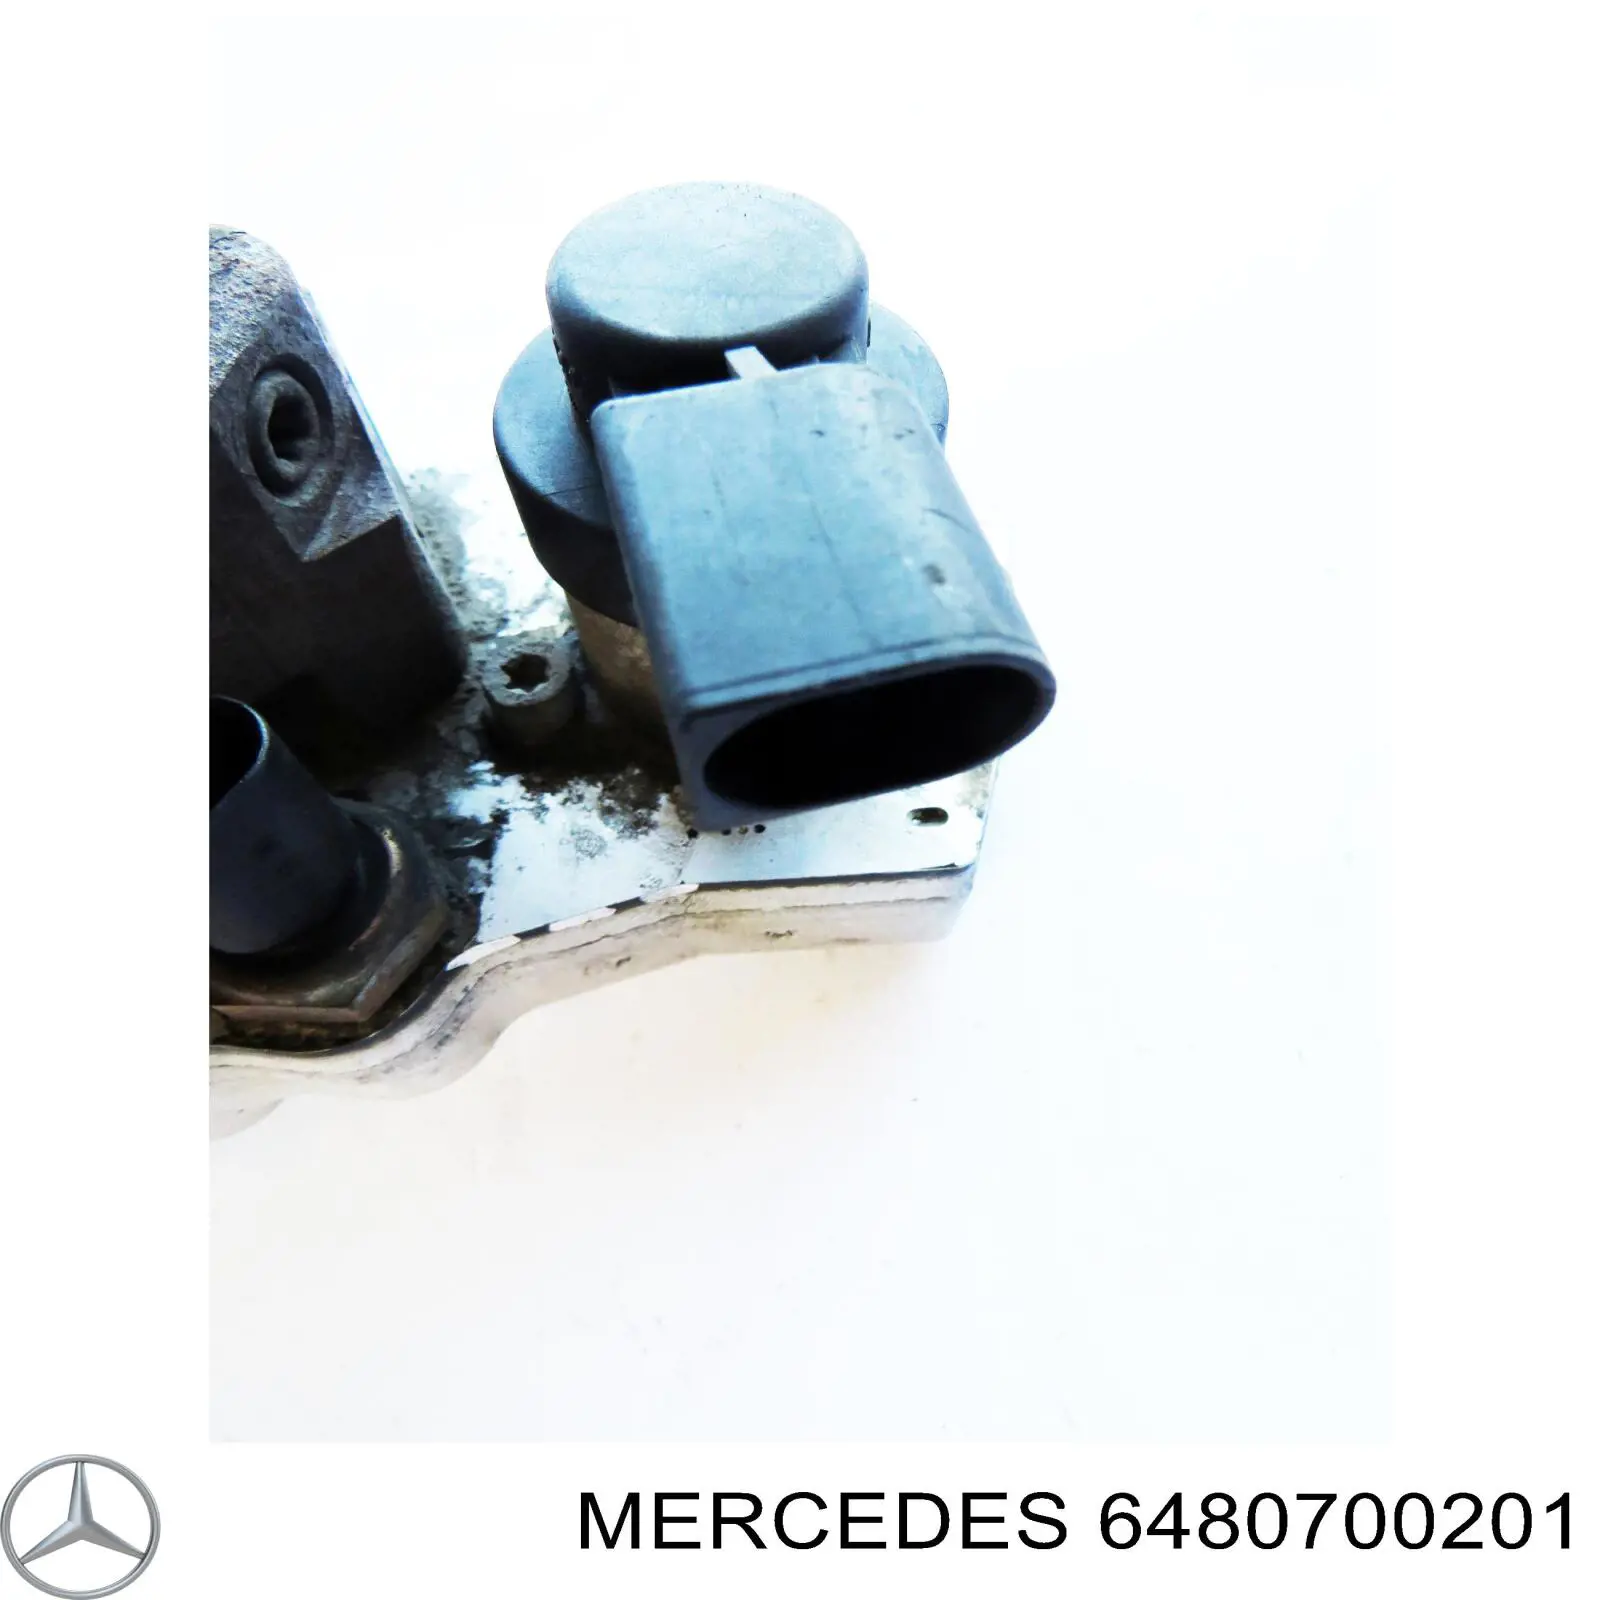 6480700201 Mercedes bomba inyectora